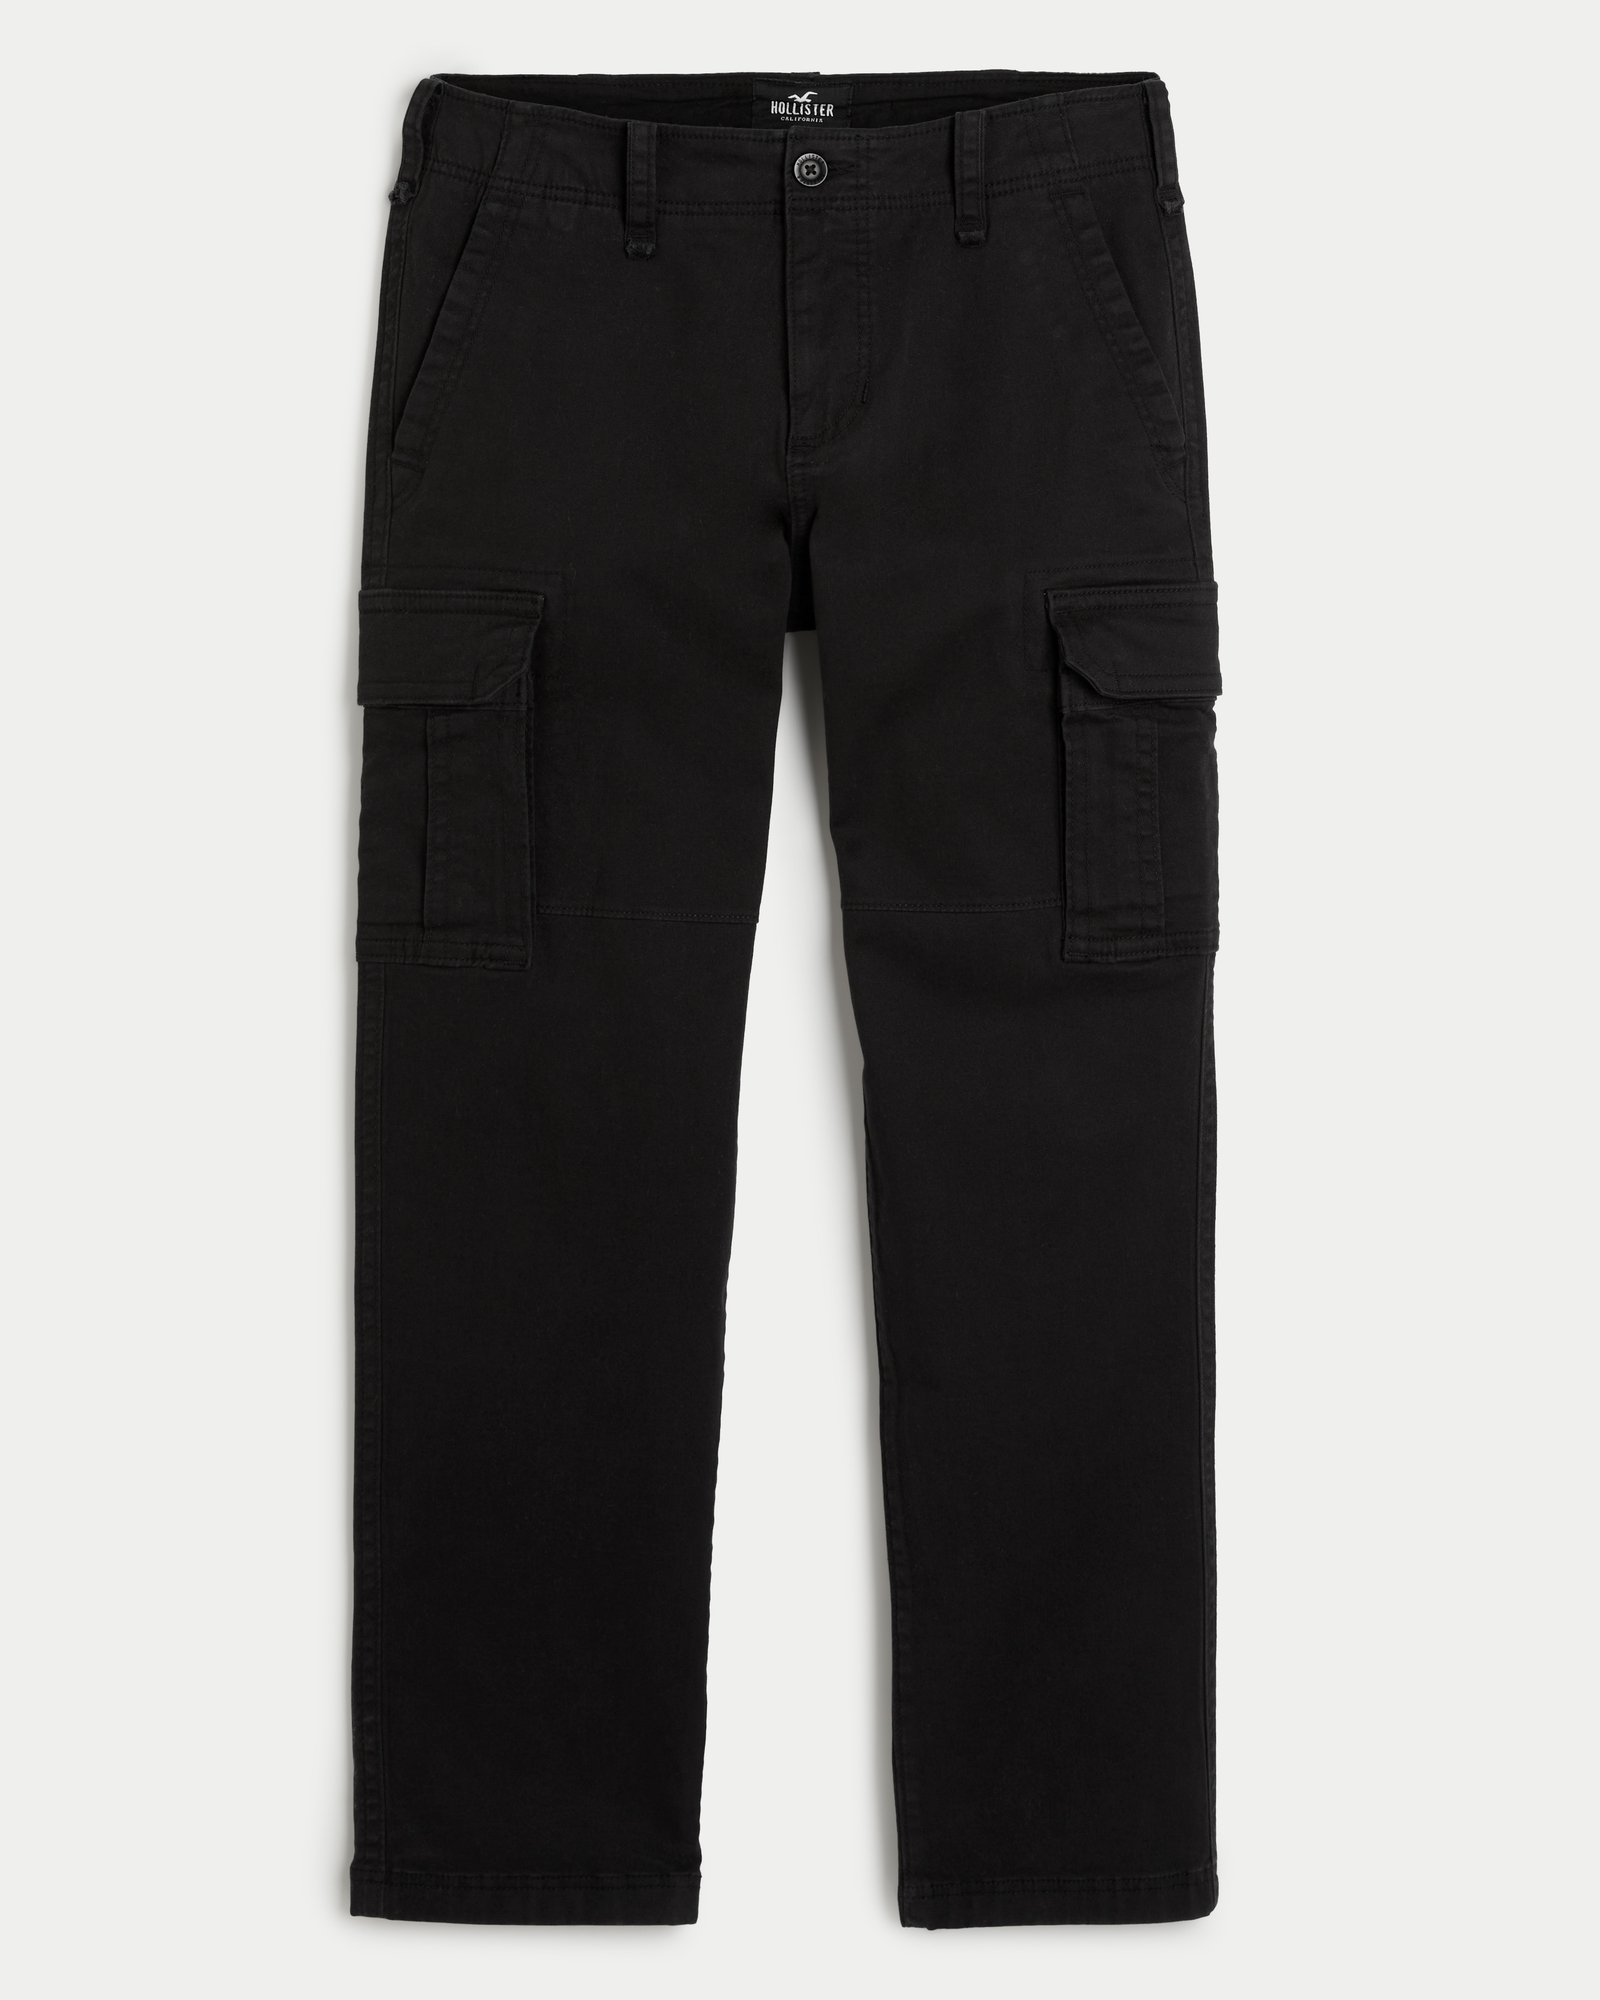 Buy Krystle Men's Slim Fit Cotton Cargo Pants (Black) at